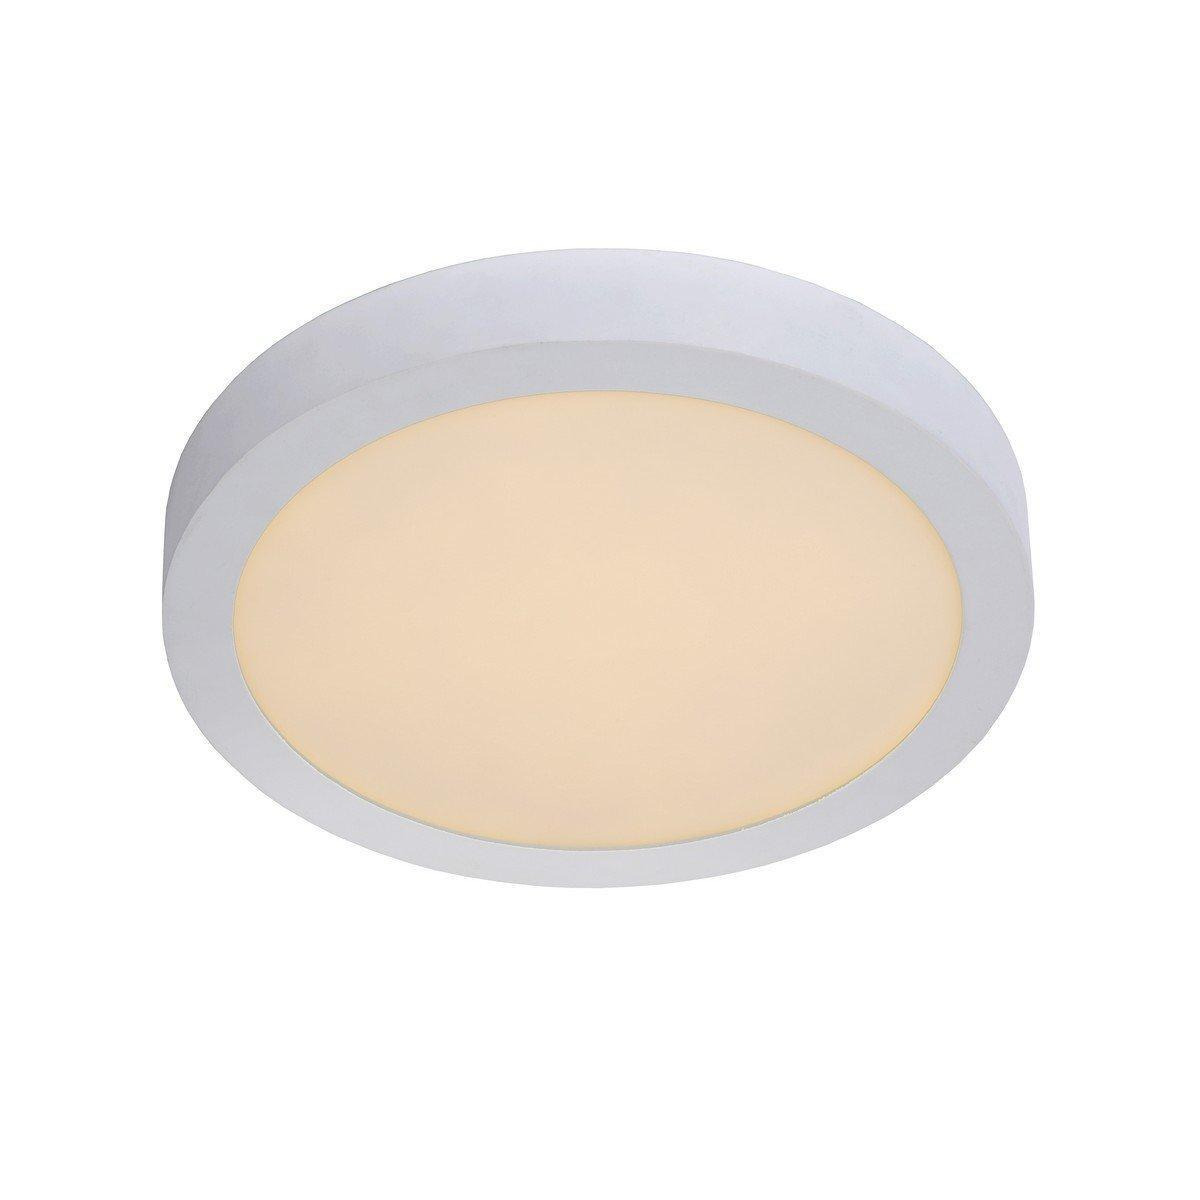 'BRICE' Dimmable Stylish Round Bathroom LED Flush Ceiling Light - image 1